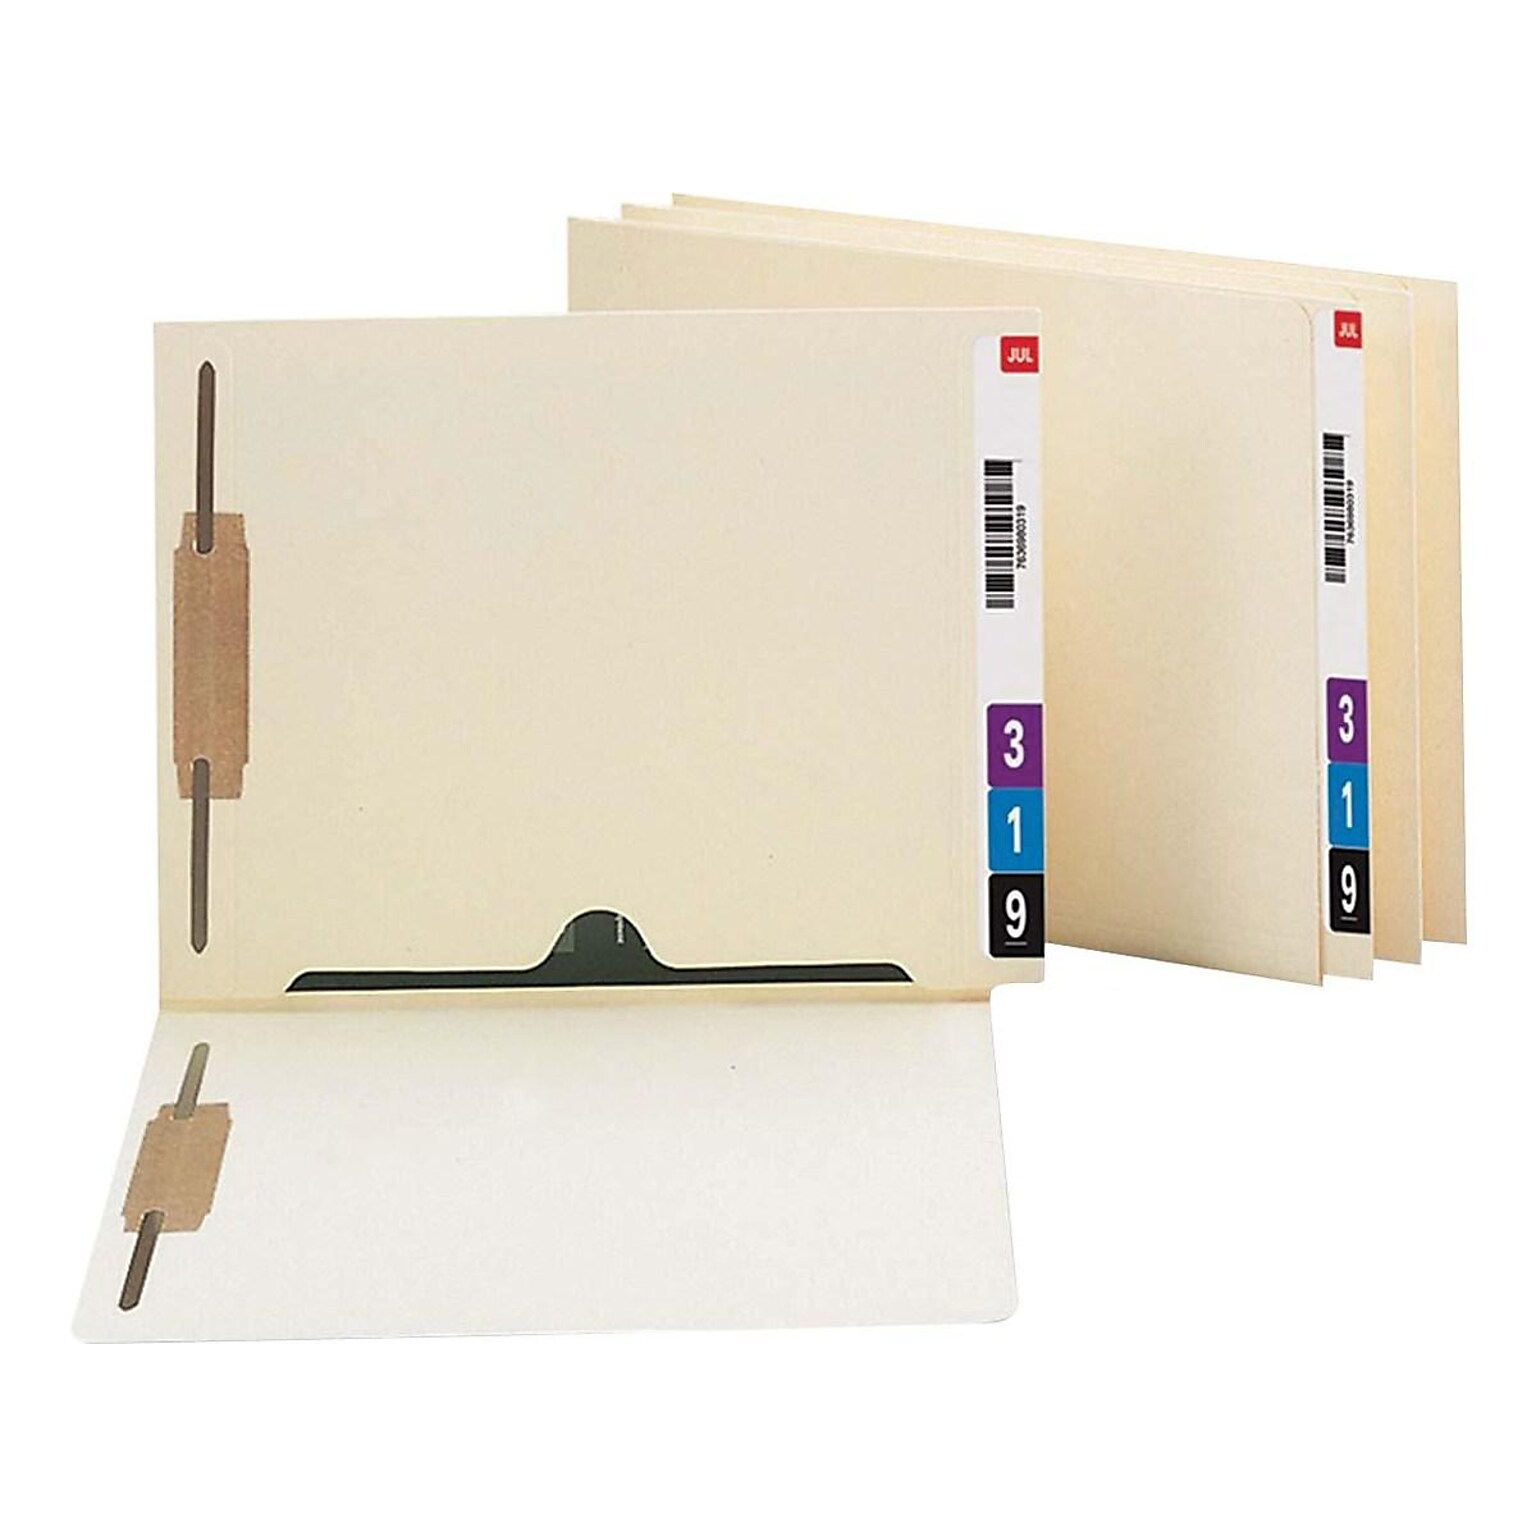 Smead Reinforced End Tab Classification Folders, Letter Size, Manila, 50/Box (34101)